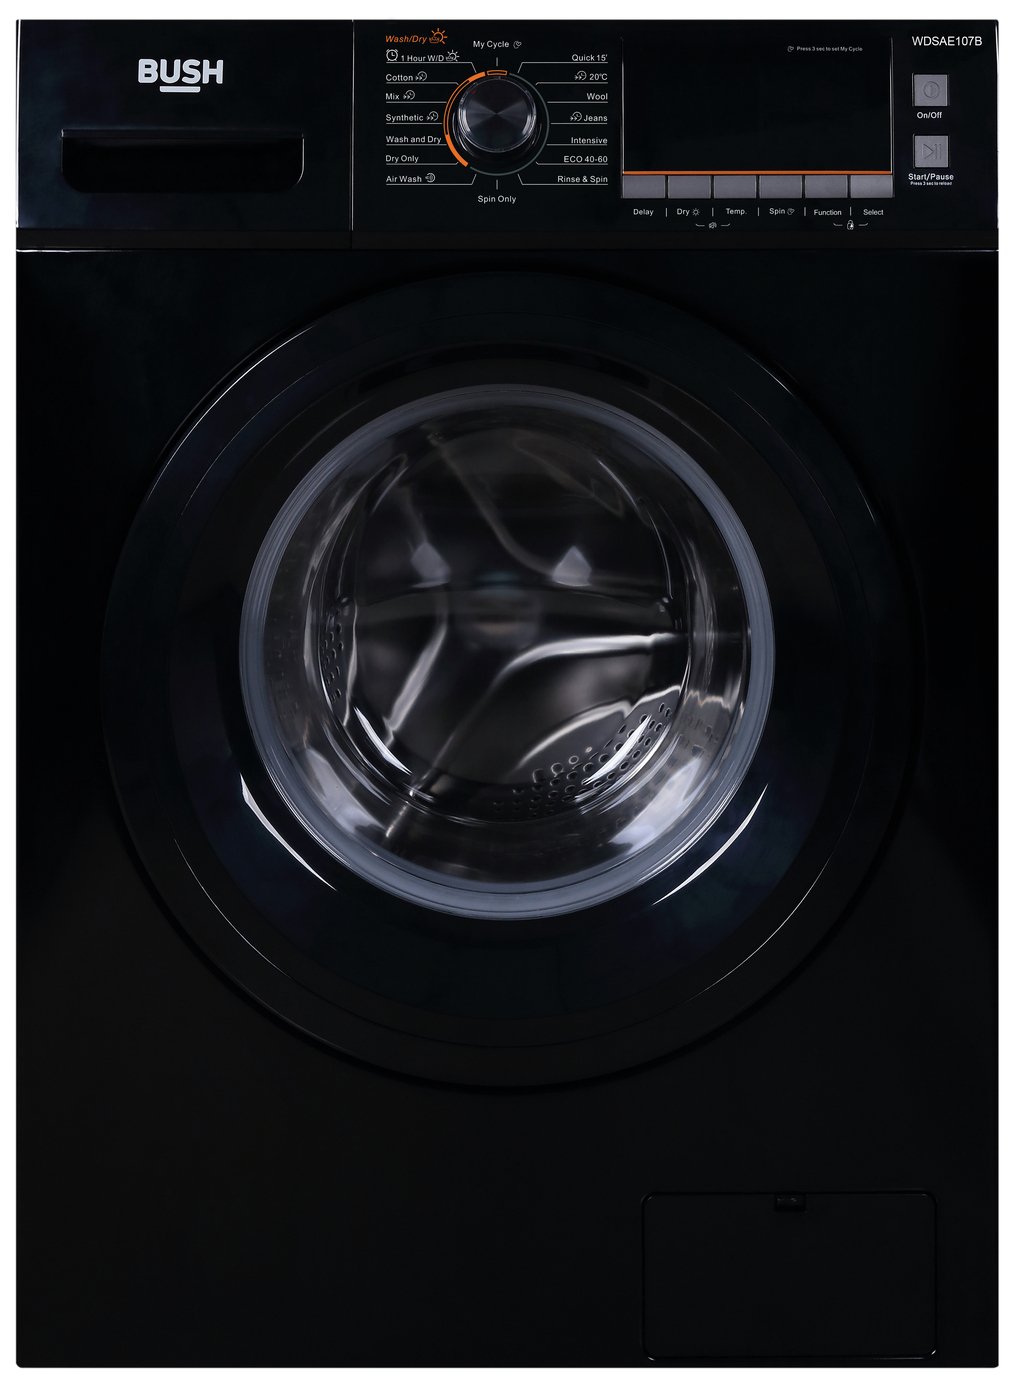 Bush WDSAE107B 10KG/7KG 1500 Spin Washer Dryer - Black